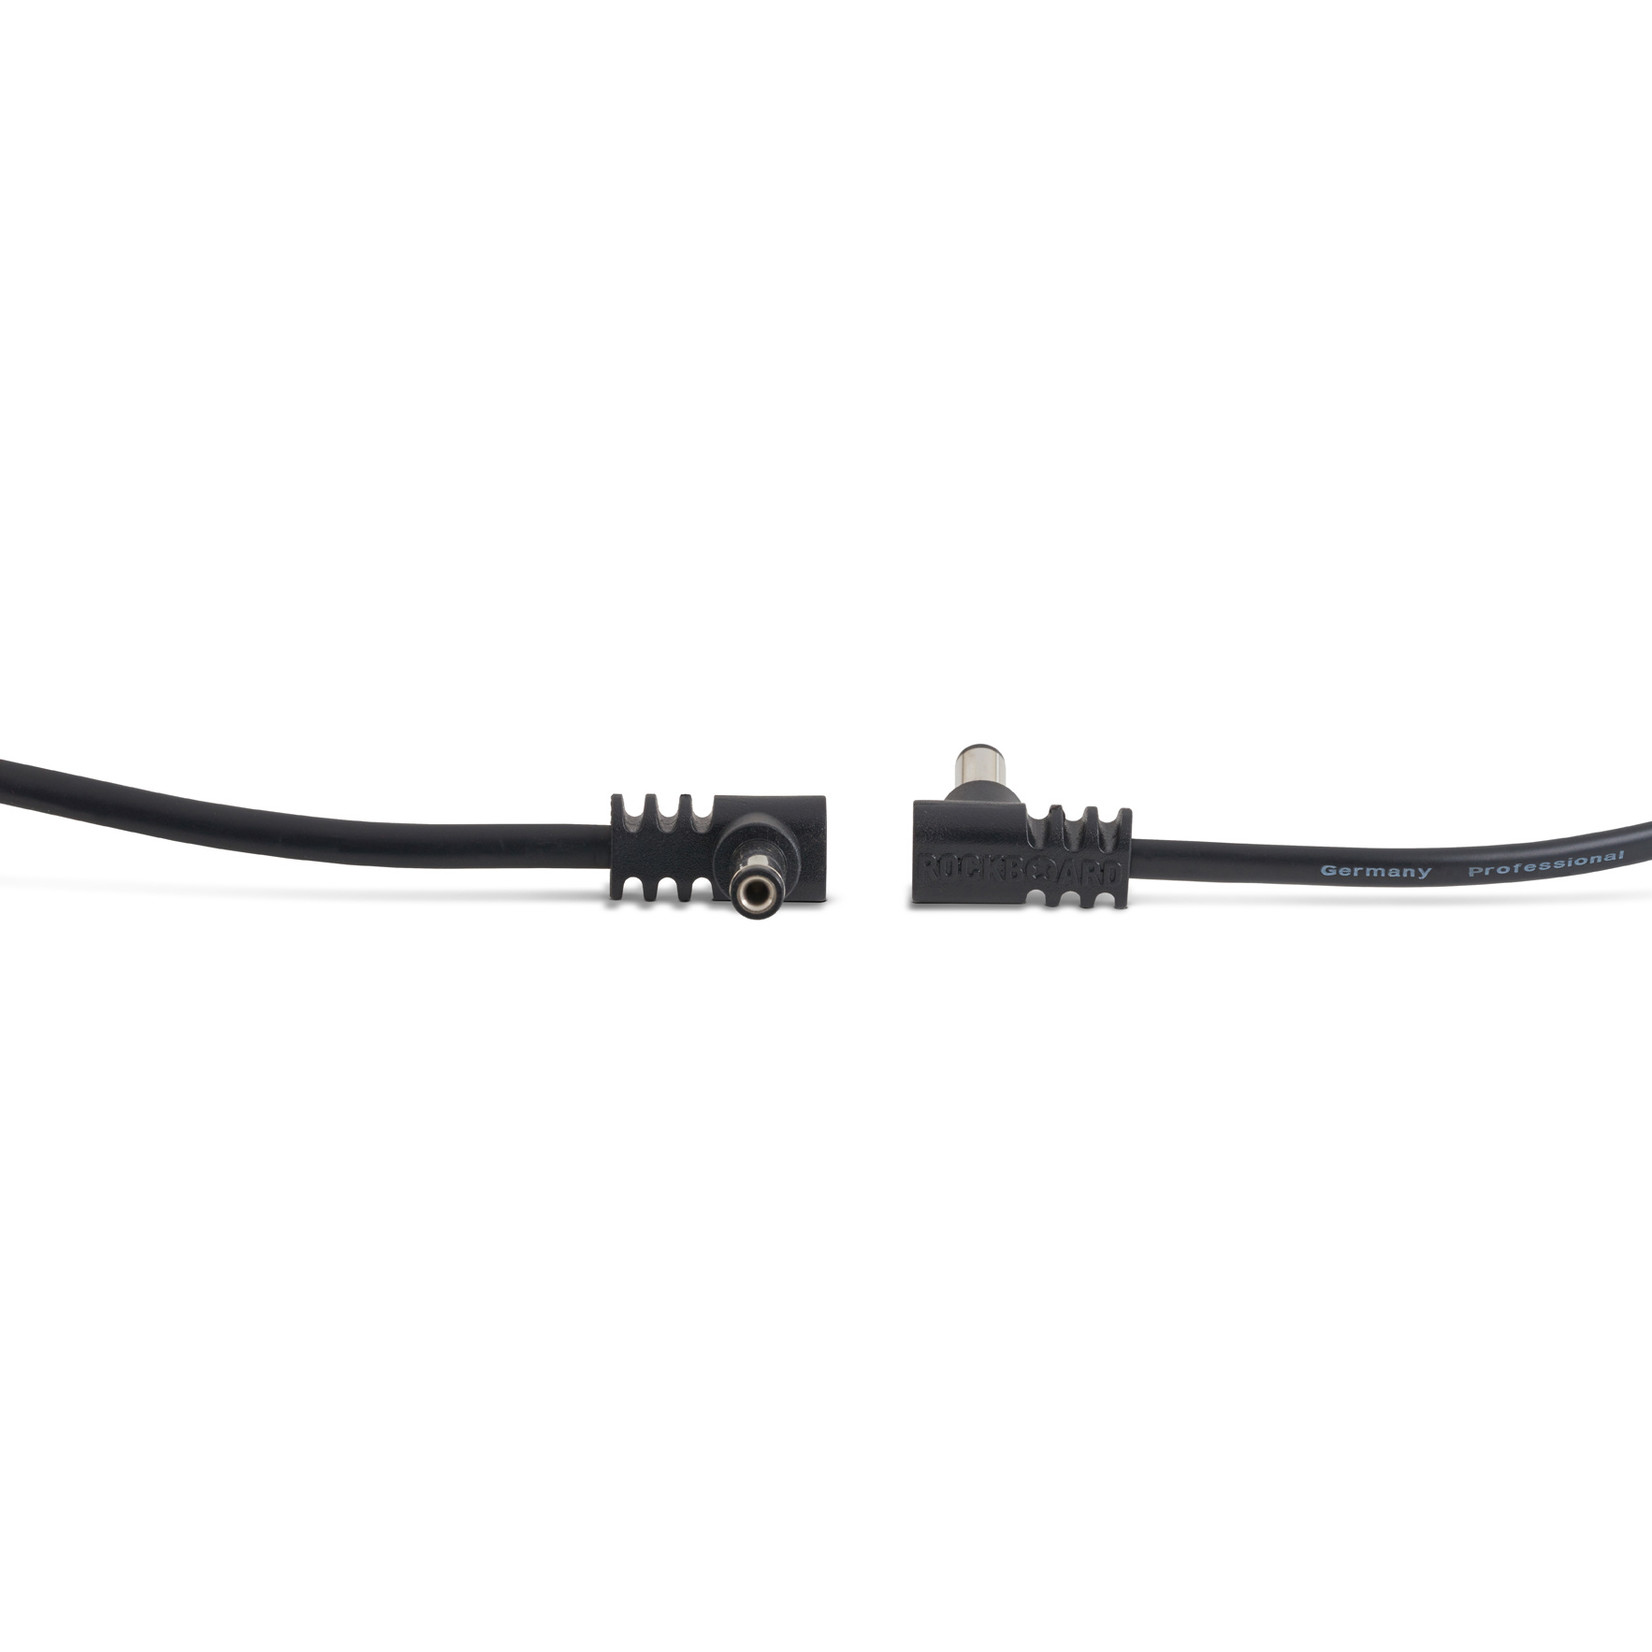 Rockboard RockBoard Flat Power Cable - Angled/Angled - 60 cm / 23 5/8"